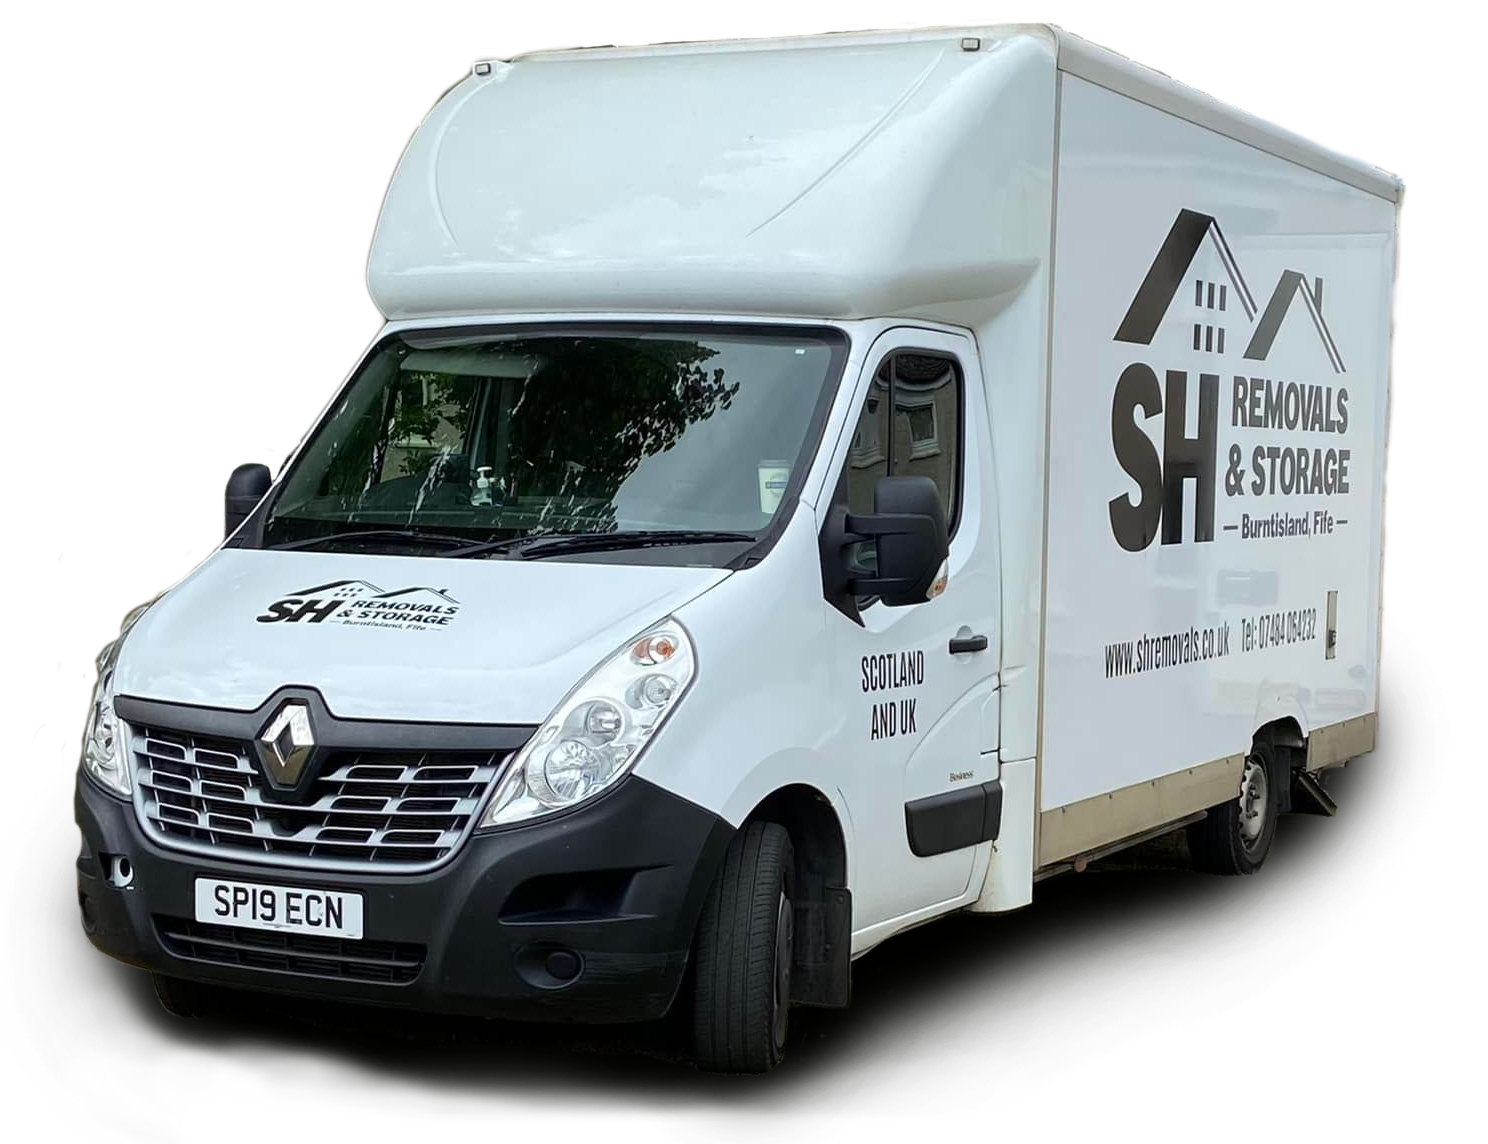 SH Residential Removals & Storage in Burntisland trucks